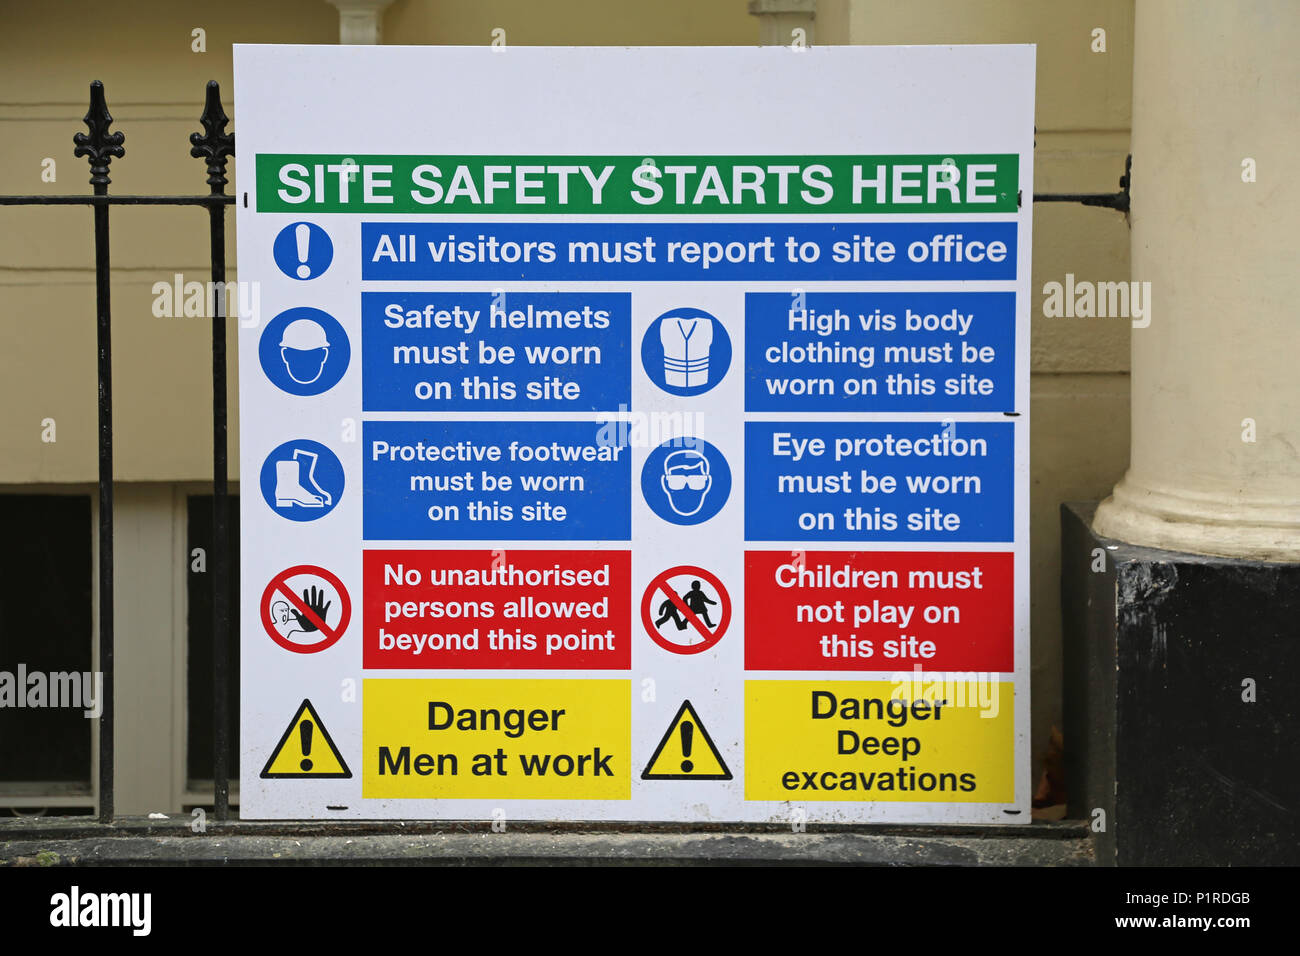 Construction Site Safety Starts Here Mandatory Information Board Stock Photo